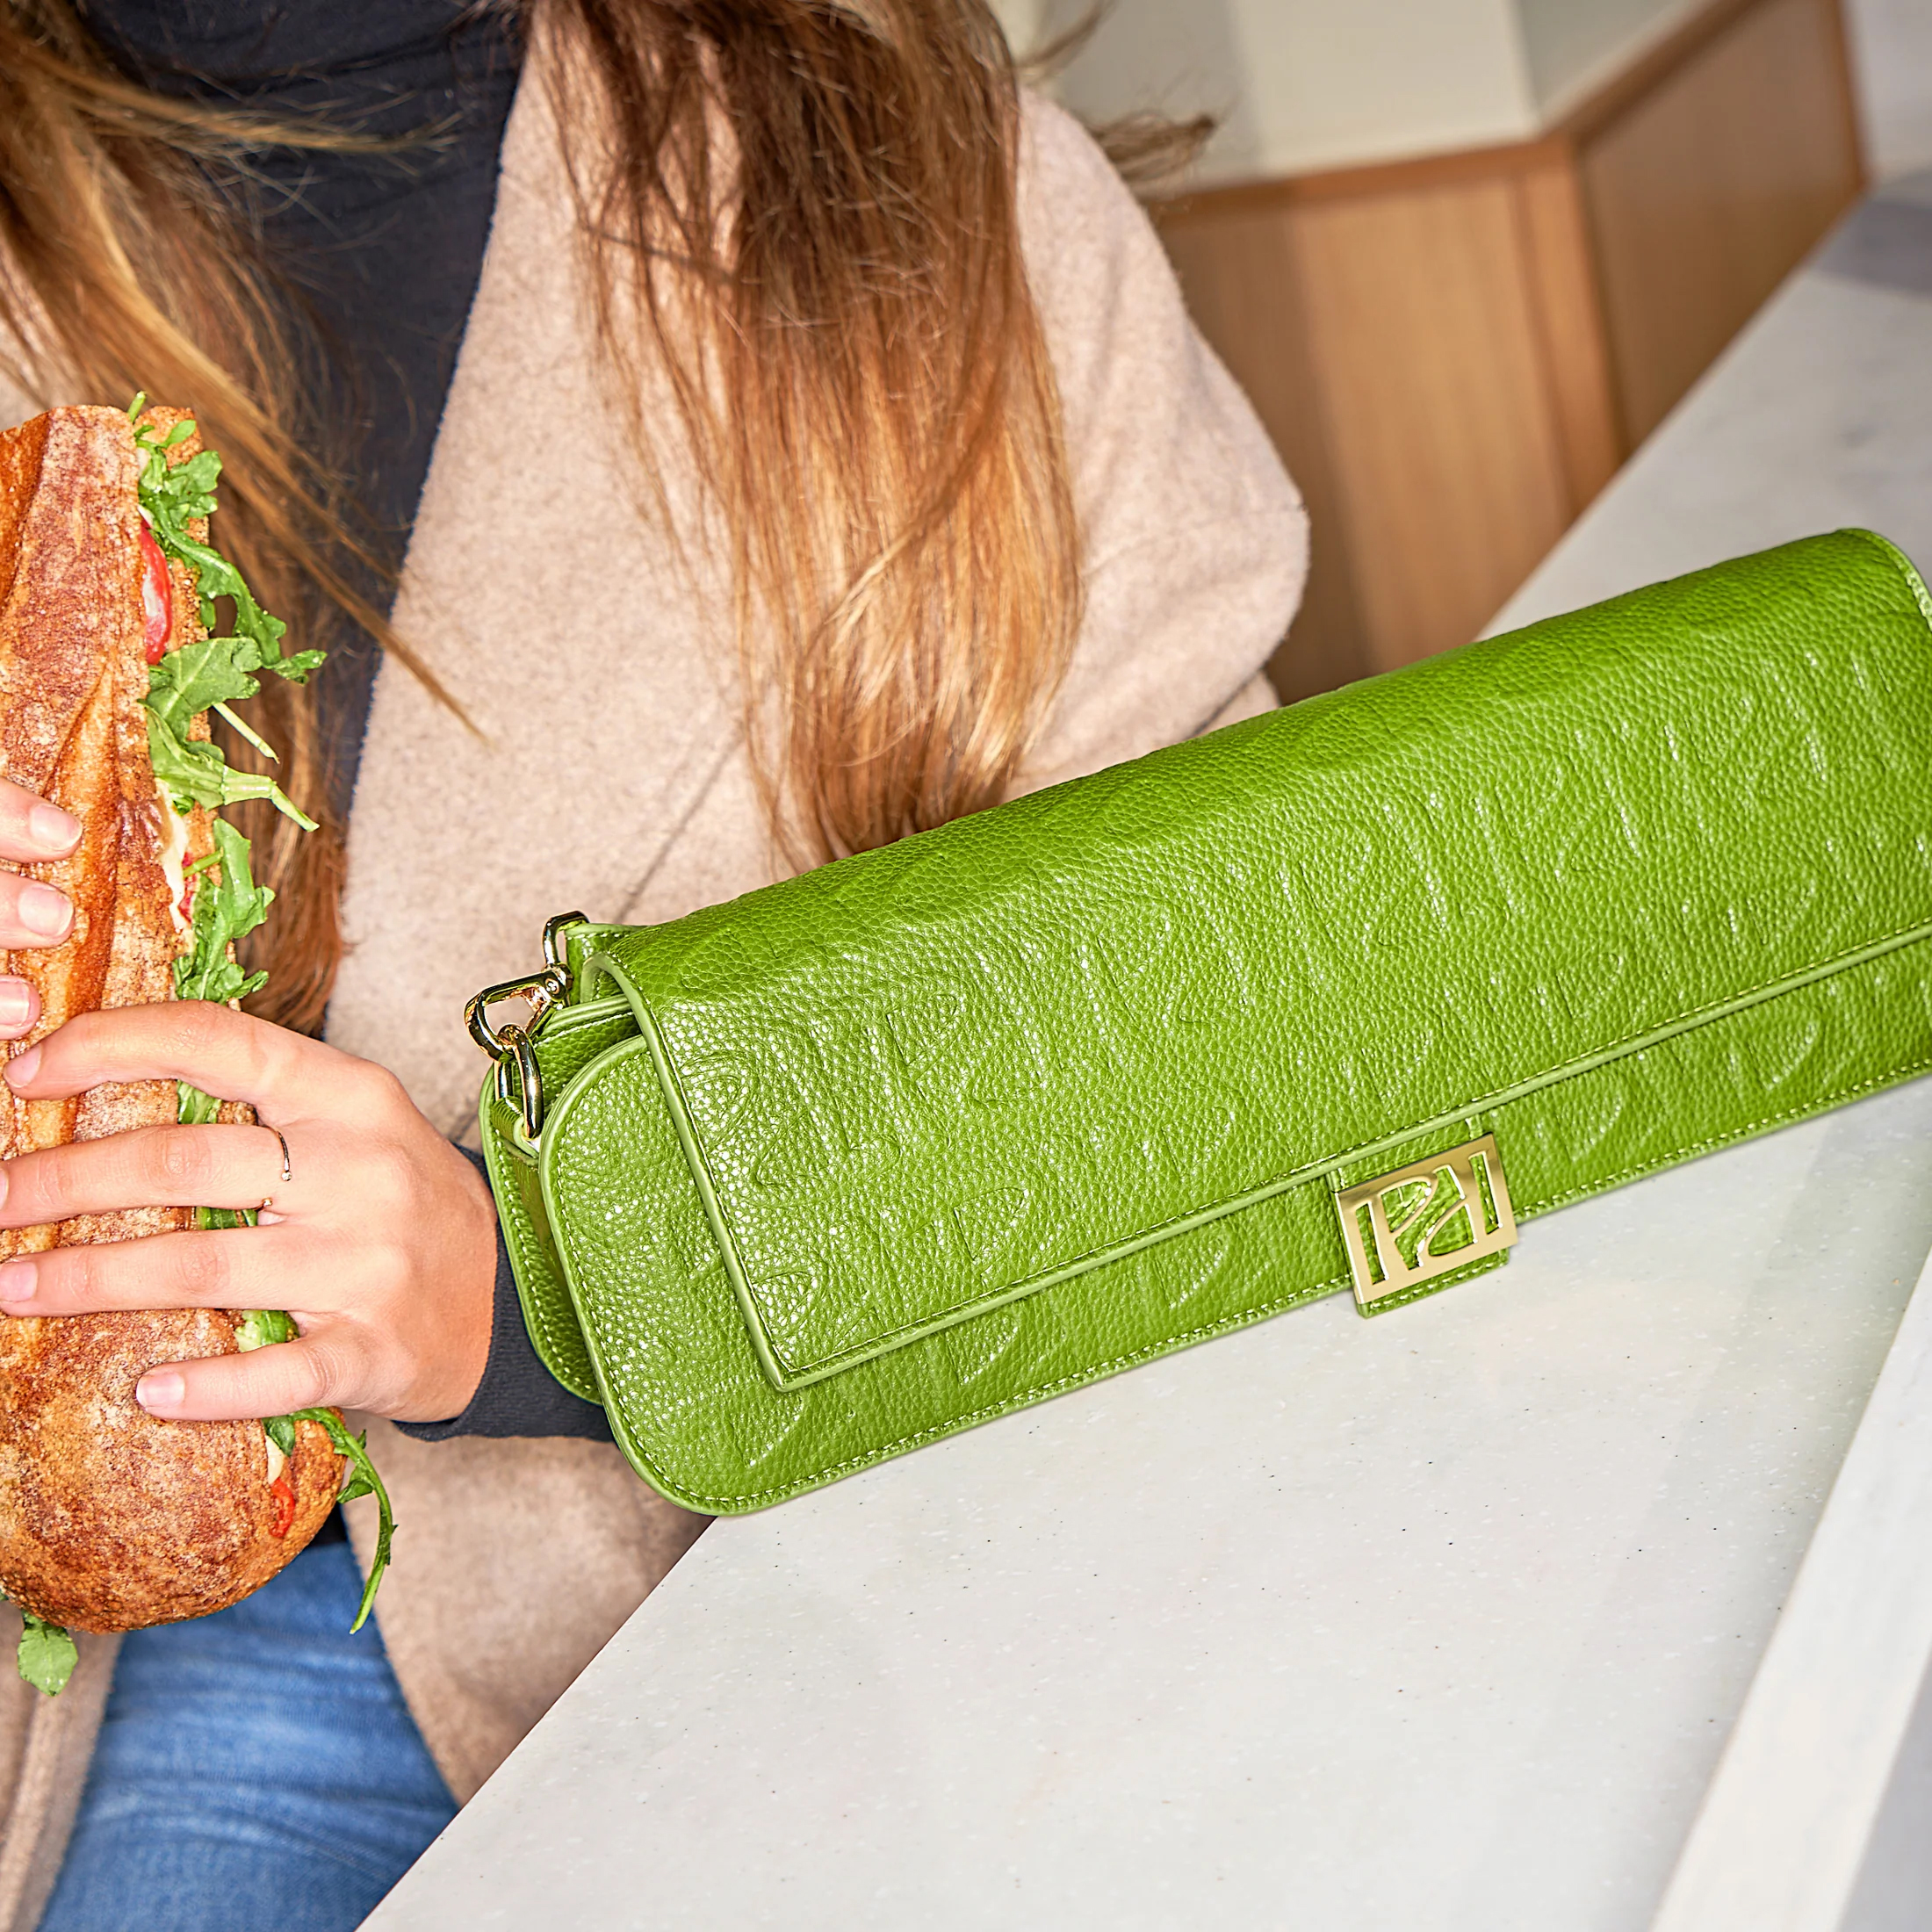 Panera bread baguette bag lime green